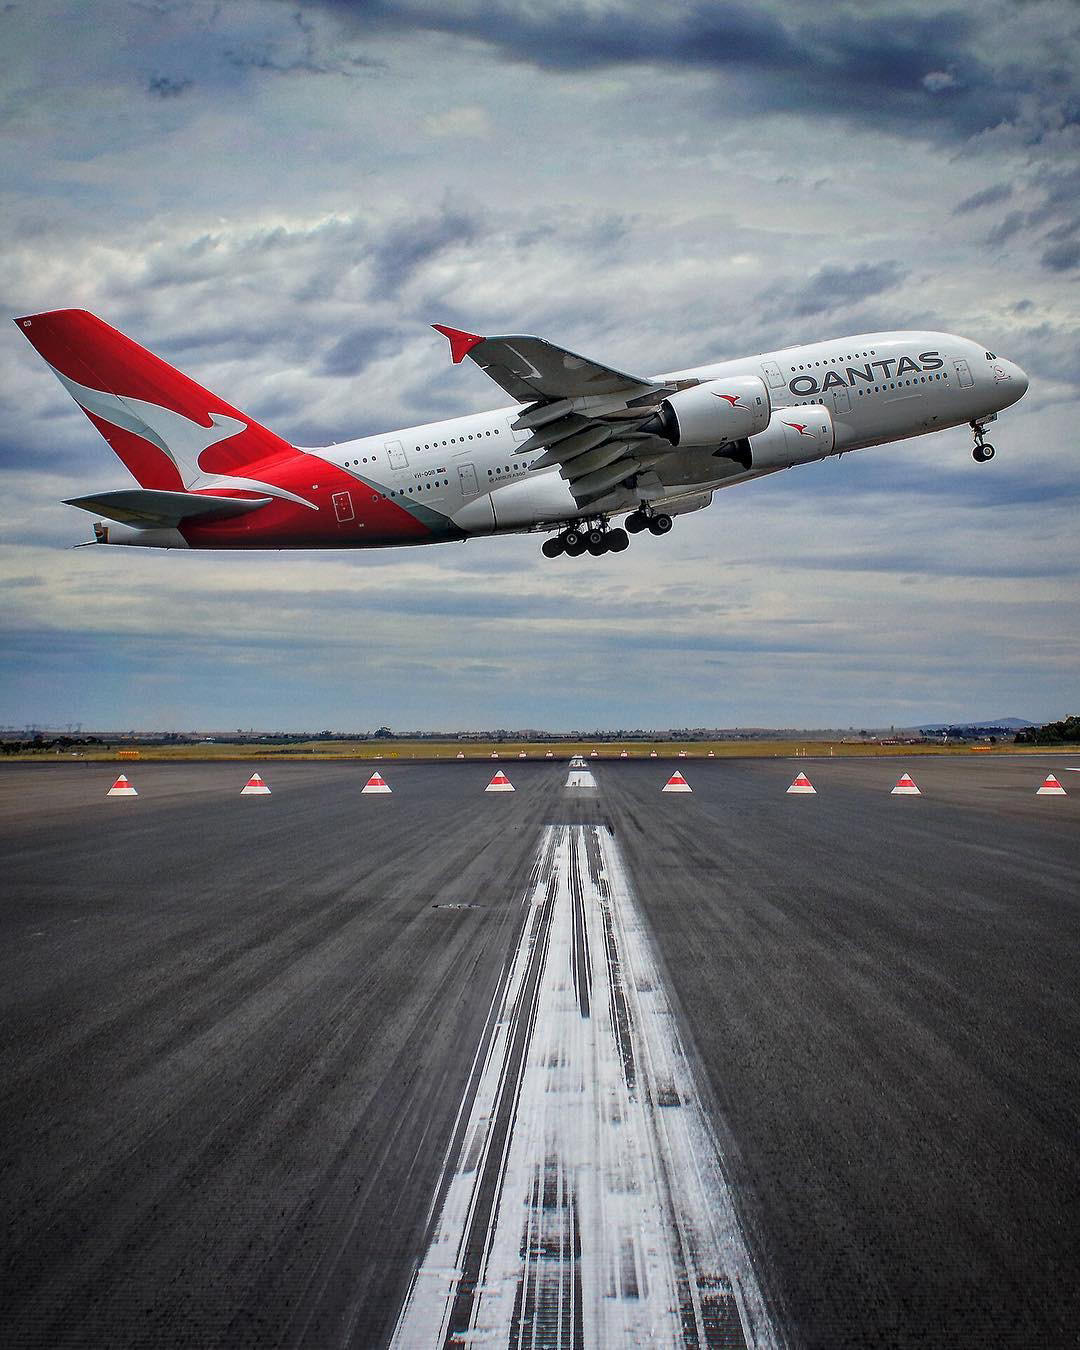 Qantas - Taking off into 2️⃣0️⃣2️⃣3️⃣